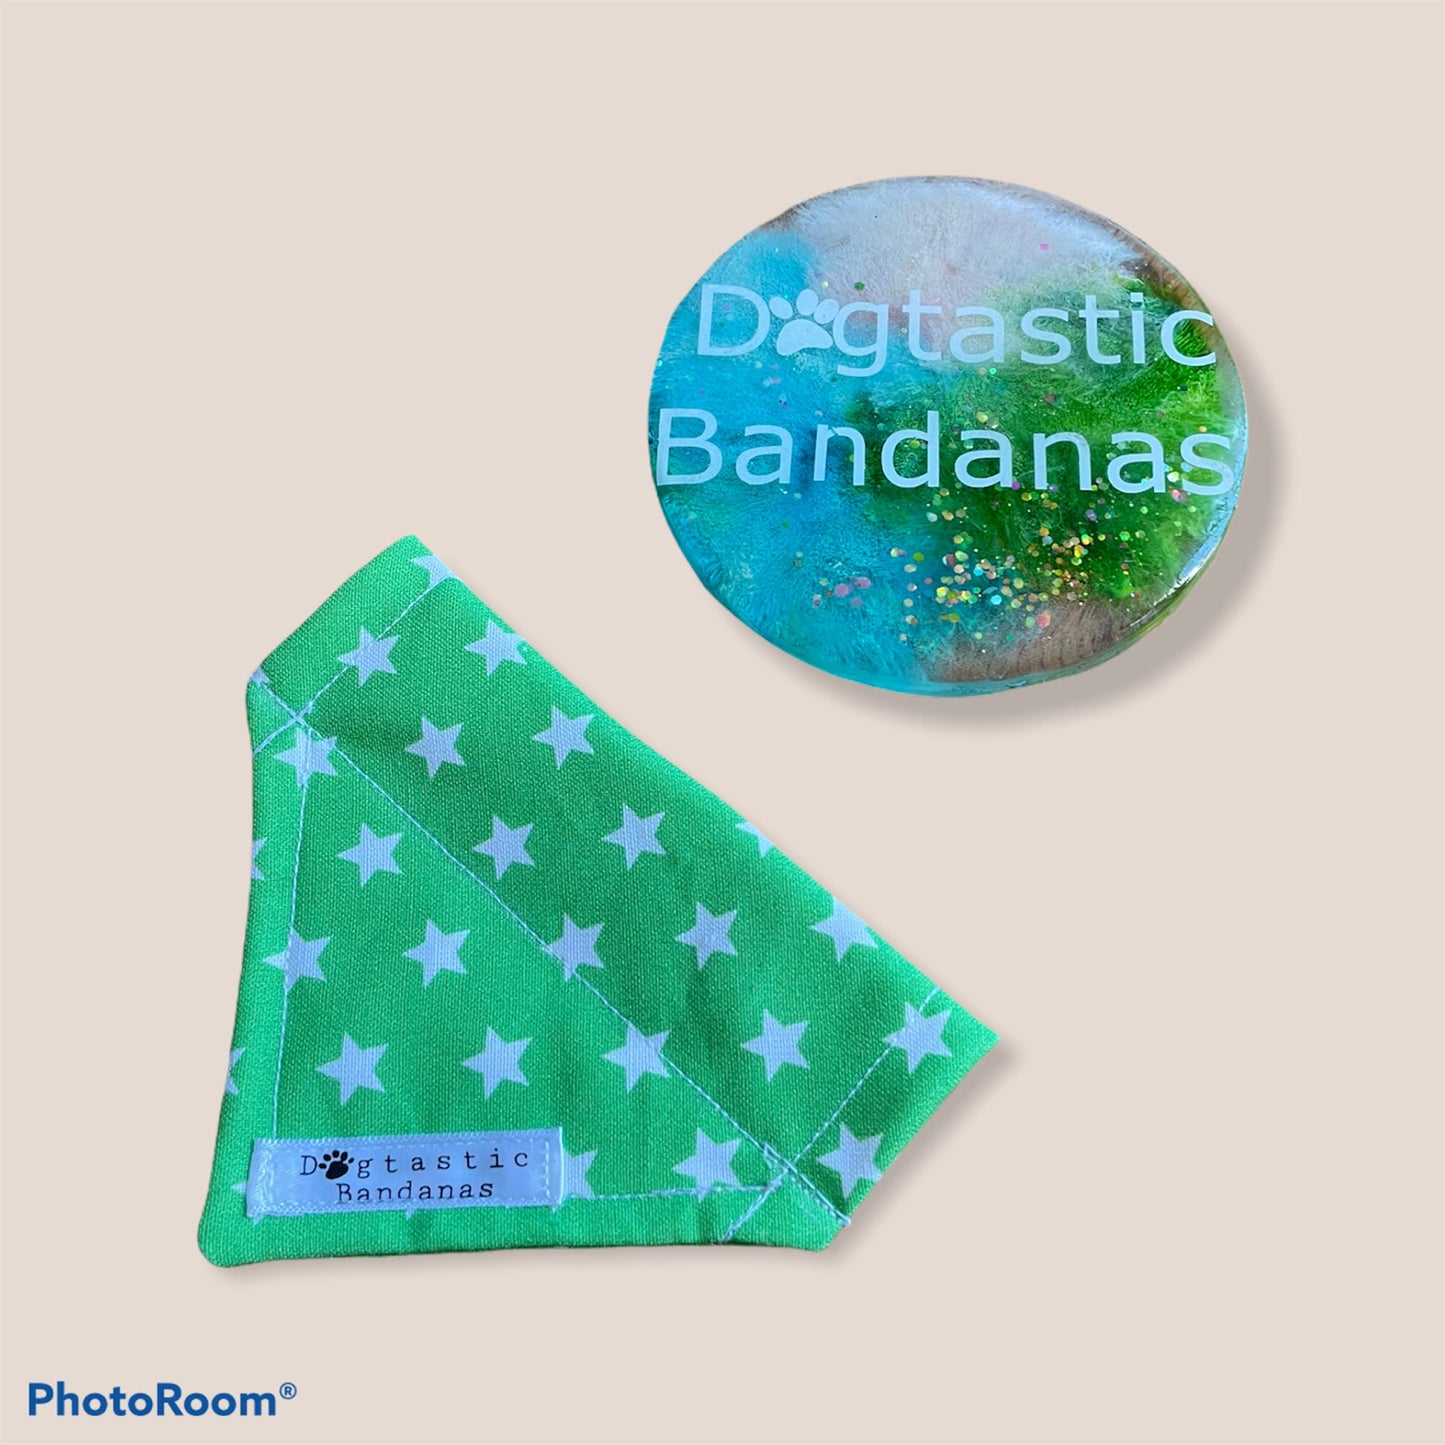 We are all stars dog/pet bandana